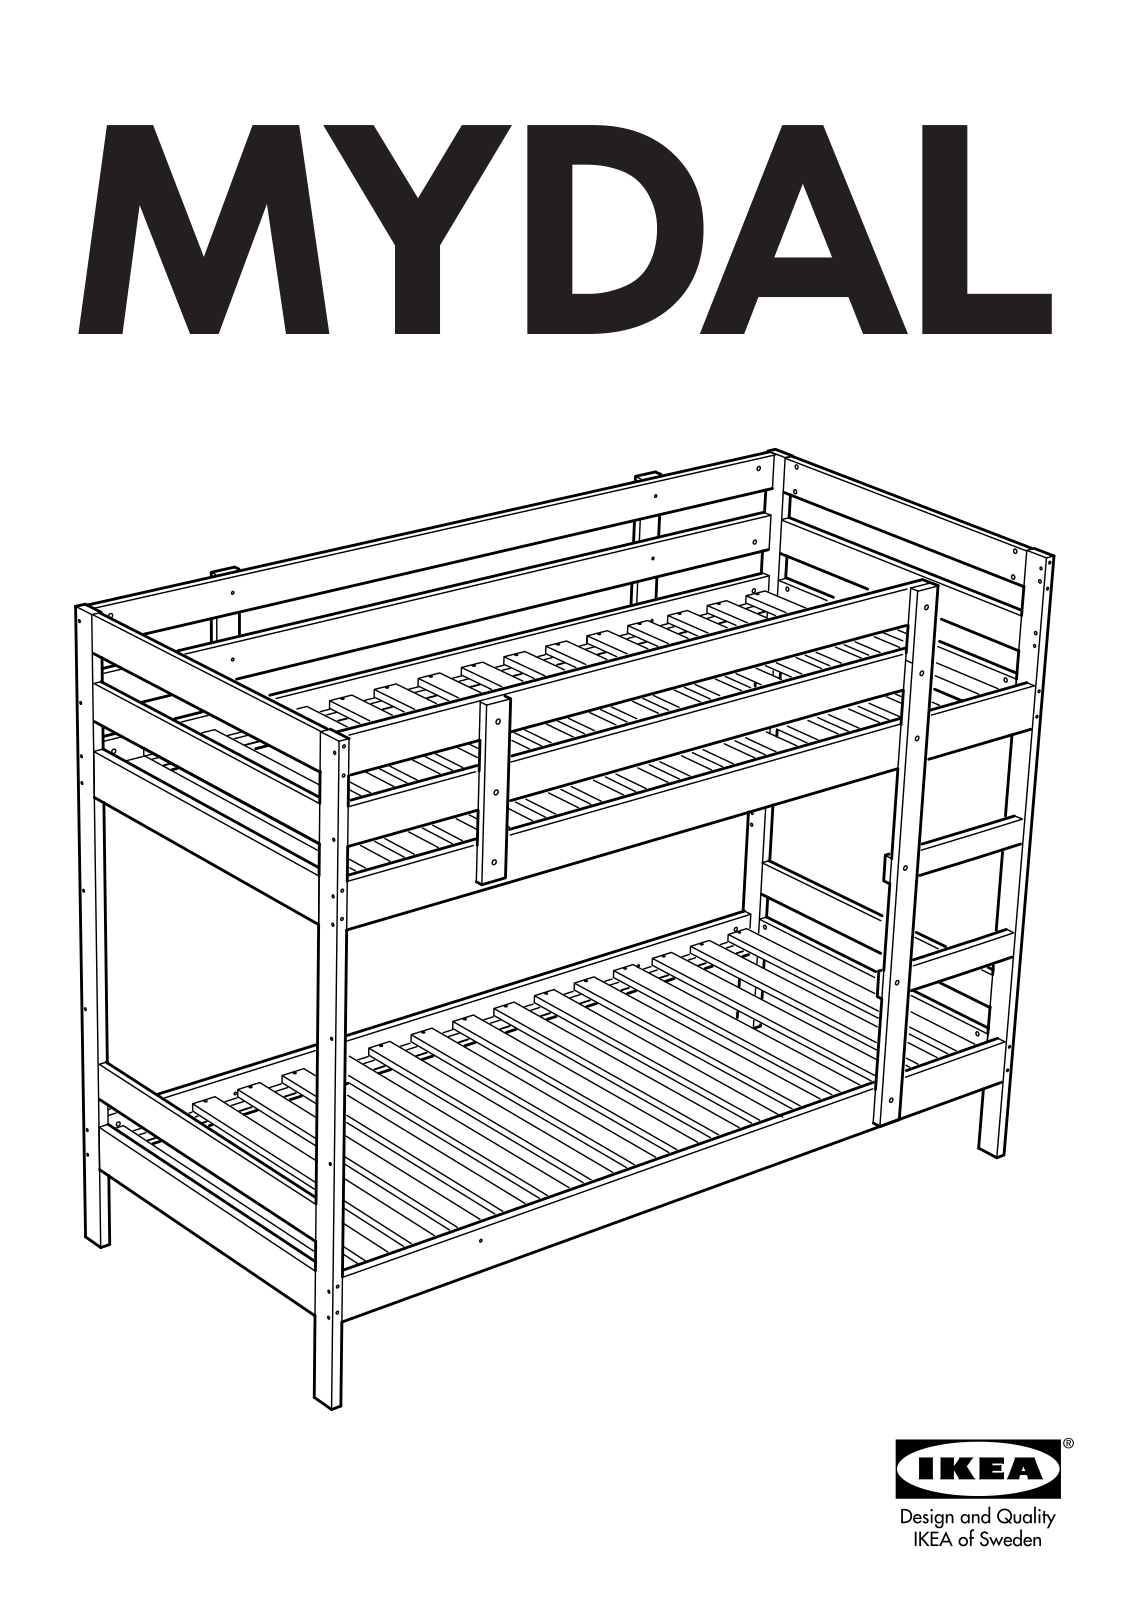 IKEA MYDAL User Manual